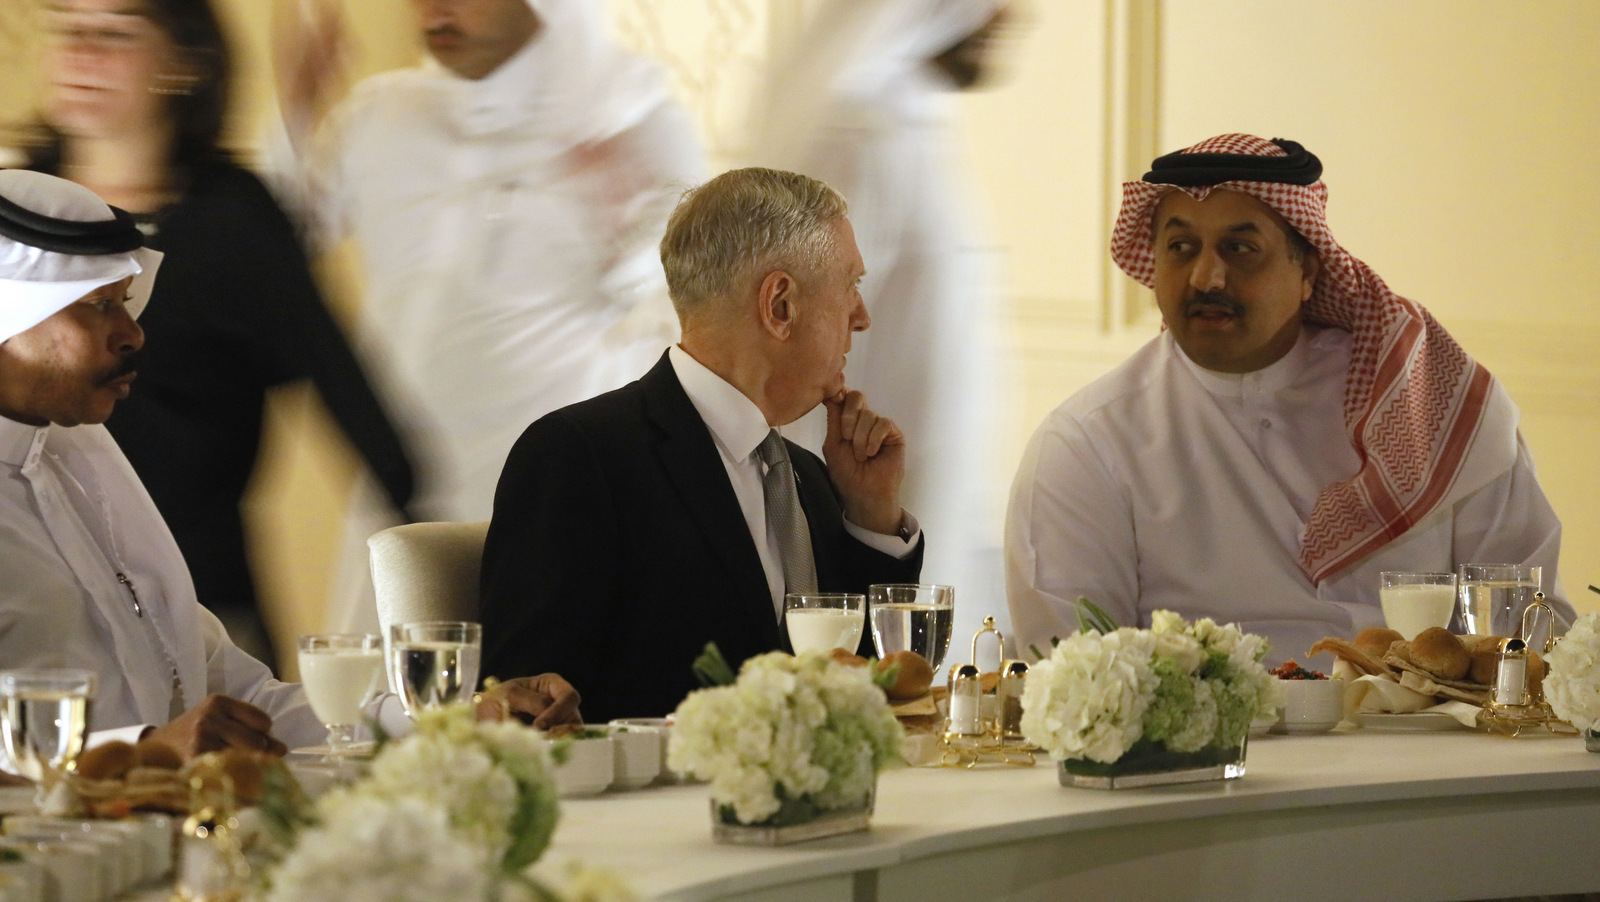 Qatar's Minister of Defense Khalid bin Mohammad Al-Attiyah, right, welcomes U.S. Defense Secretary James Mattis at his residence in Doha, Qatar, Saturday April 22, 2017. (Jonathan Ernst/AP)